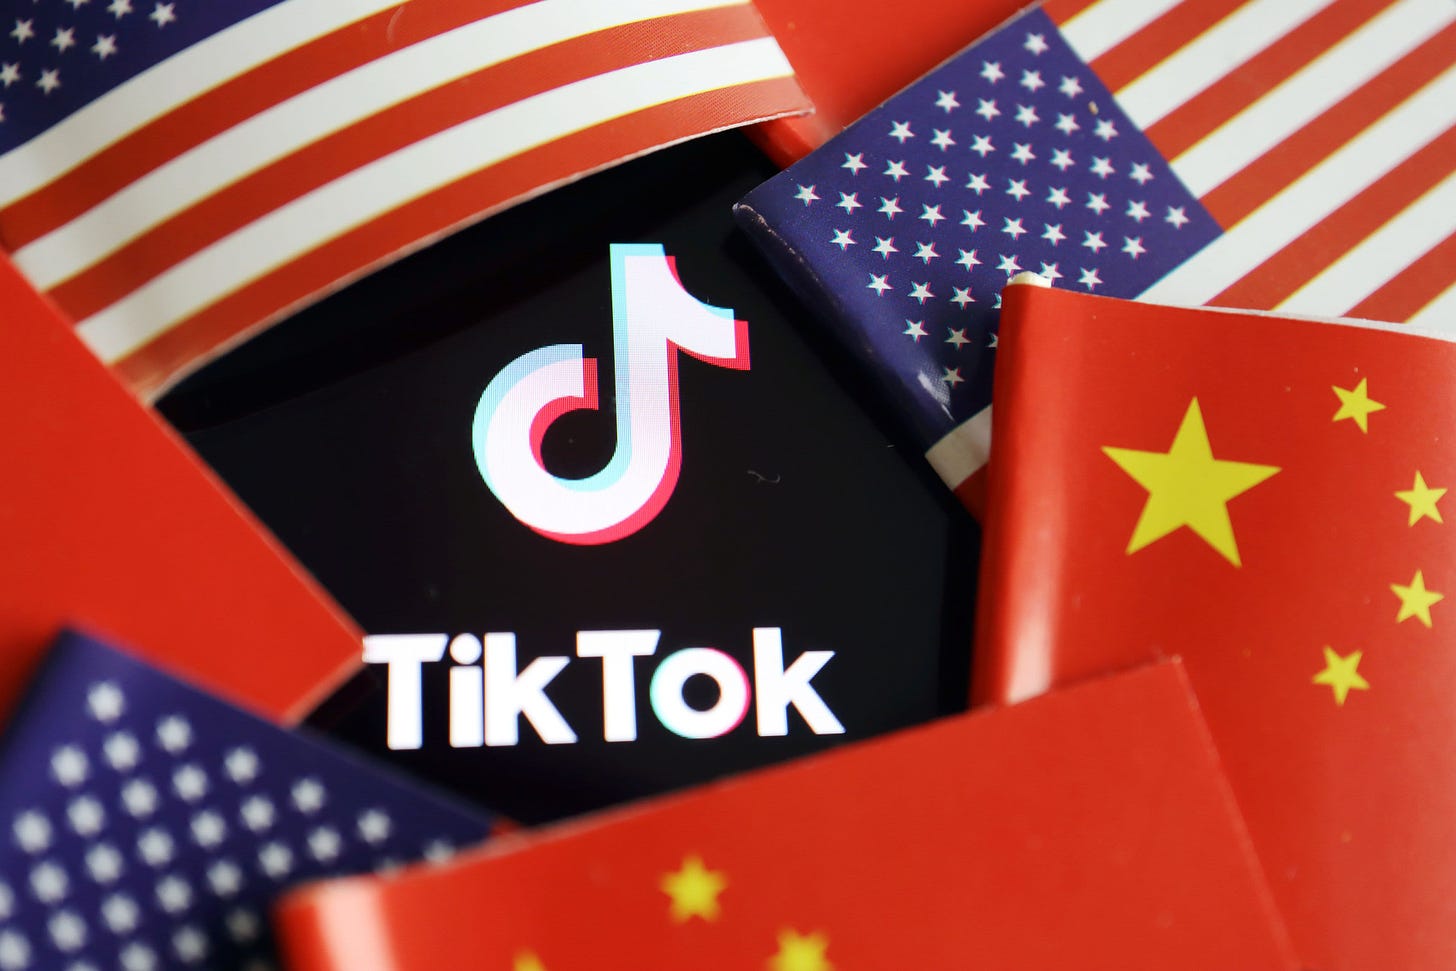 TikTok says it wants to hire 10,000 staff in the U.S.